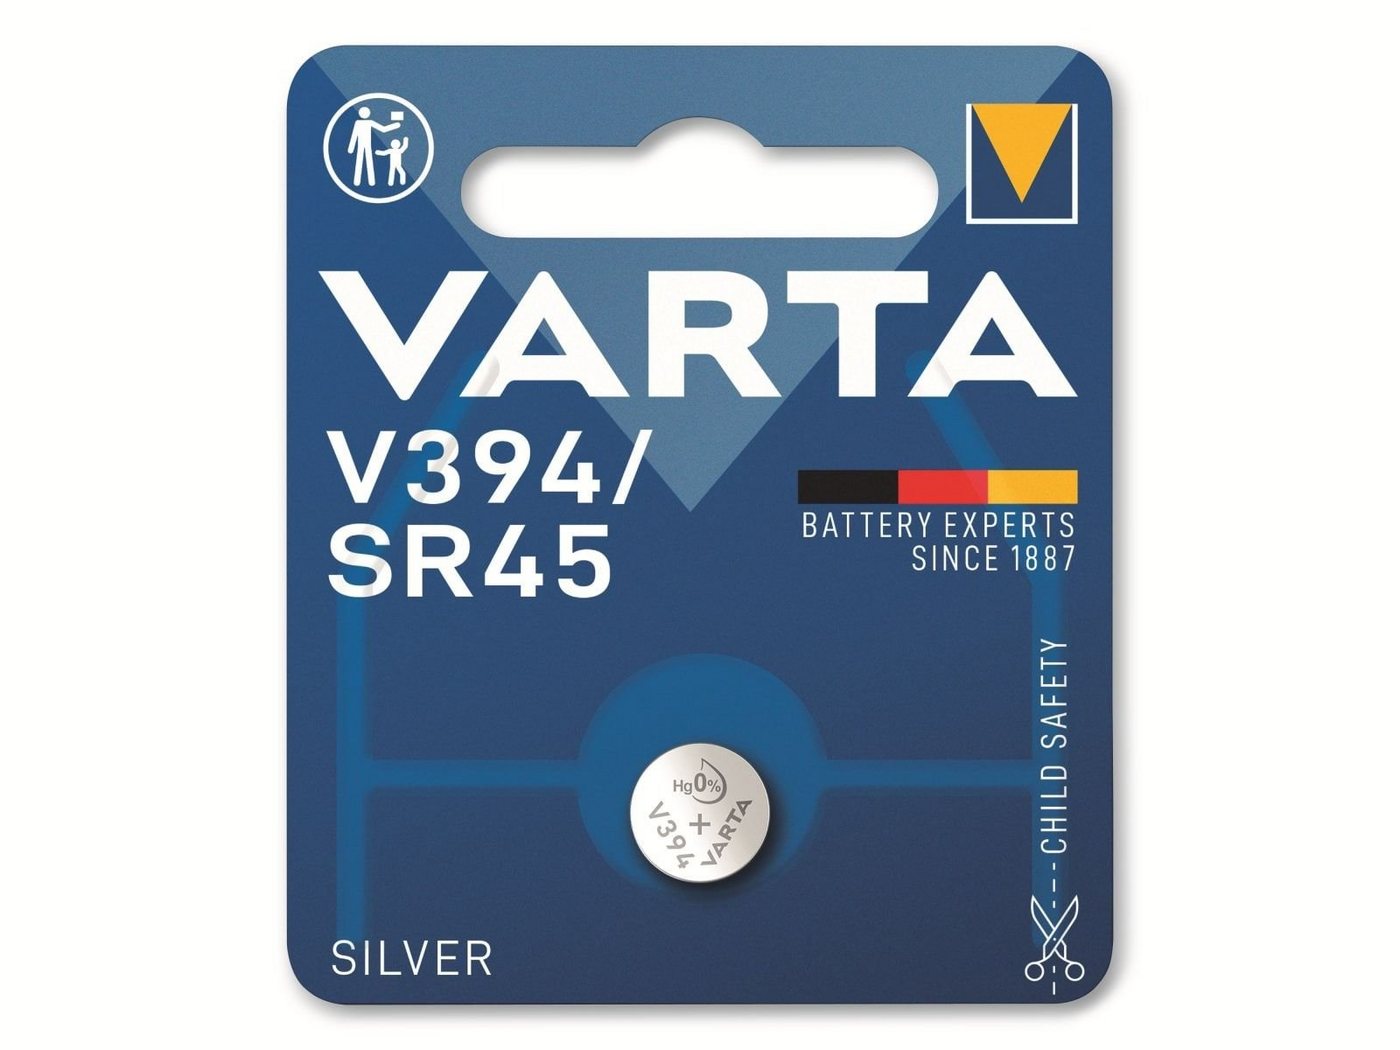 VARTA VARTA Knopfzelle Silver Oxide, 394 SR45, 1.55V, 1 Knopfzelle von VARTA